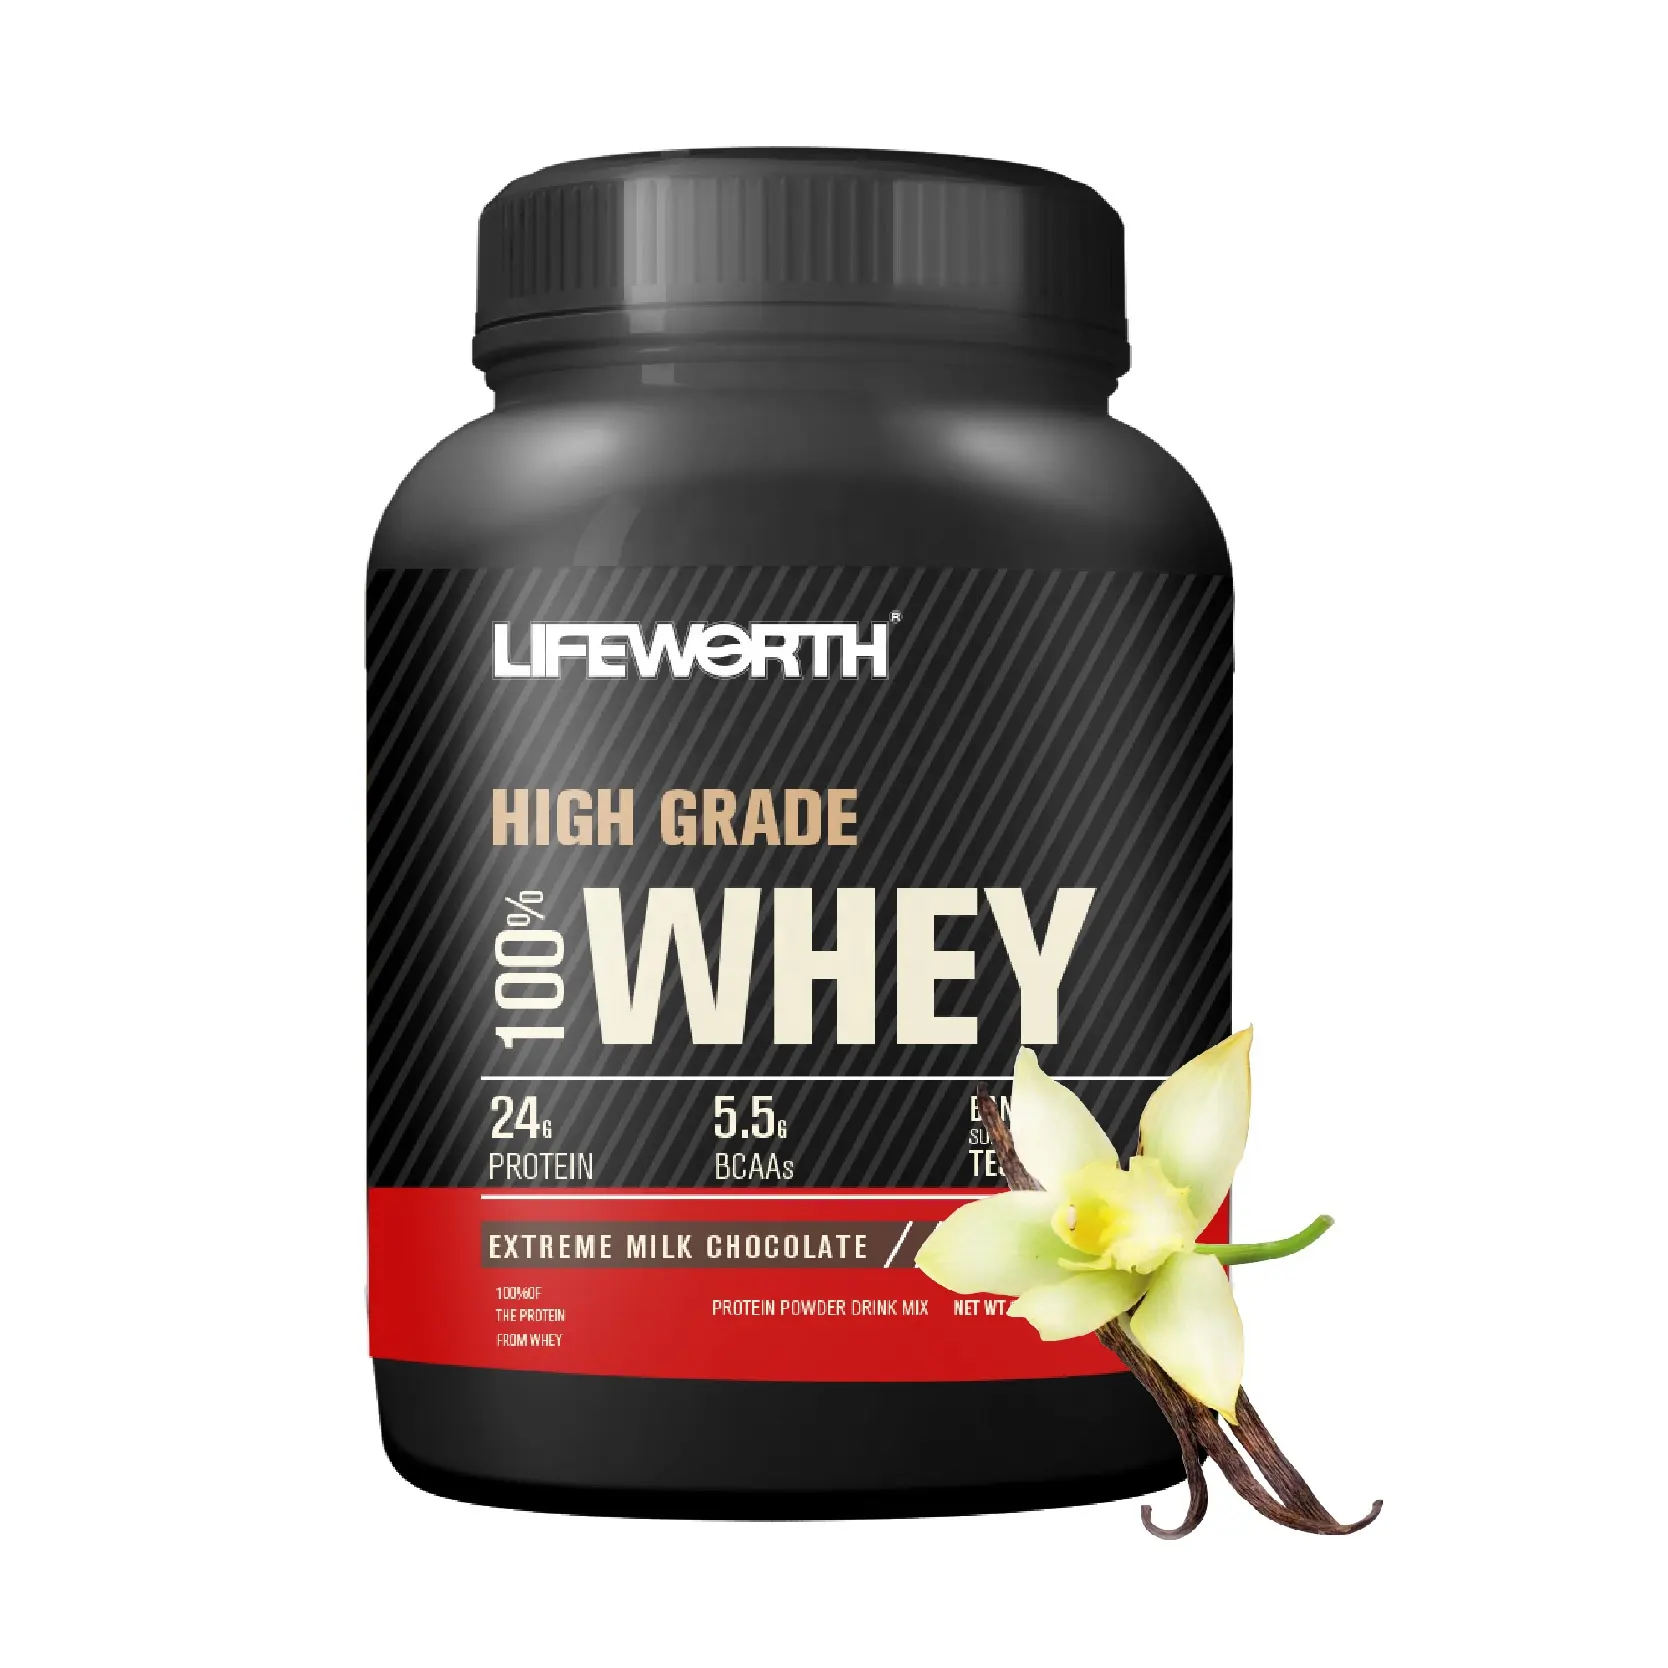 Lifeworth chocolate whey & pea protein powder isolate